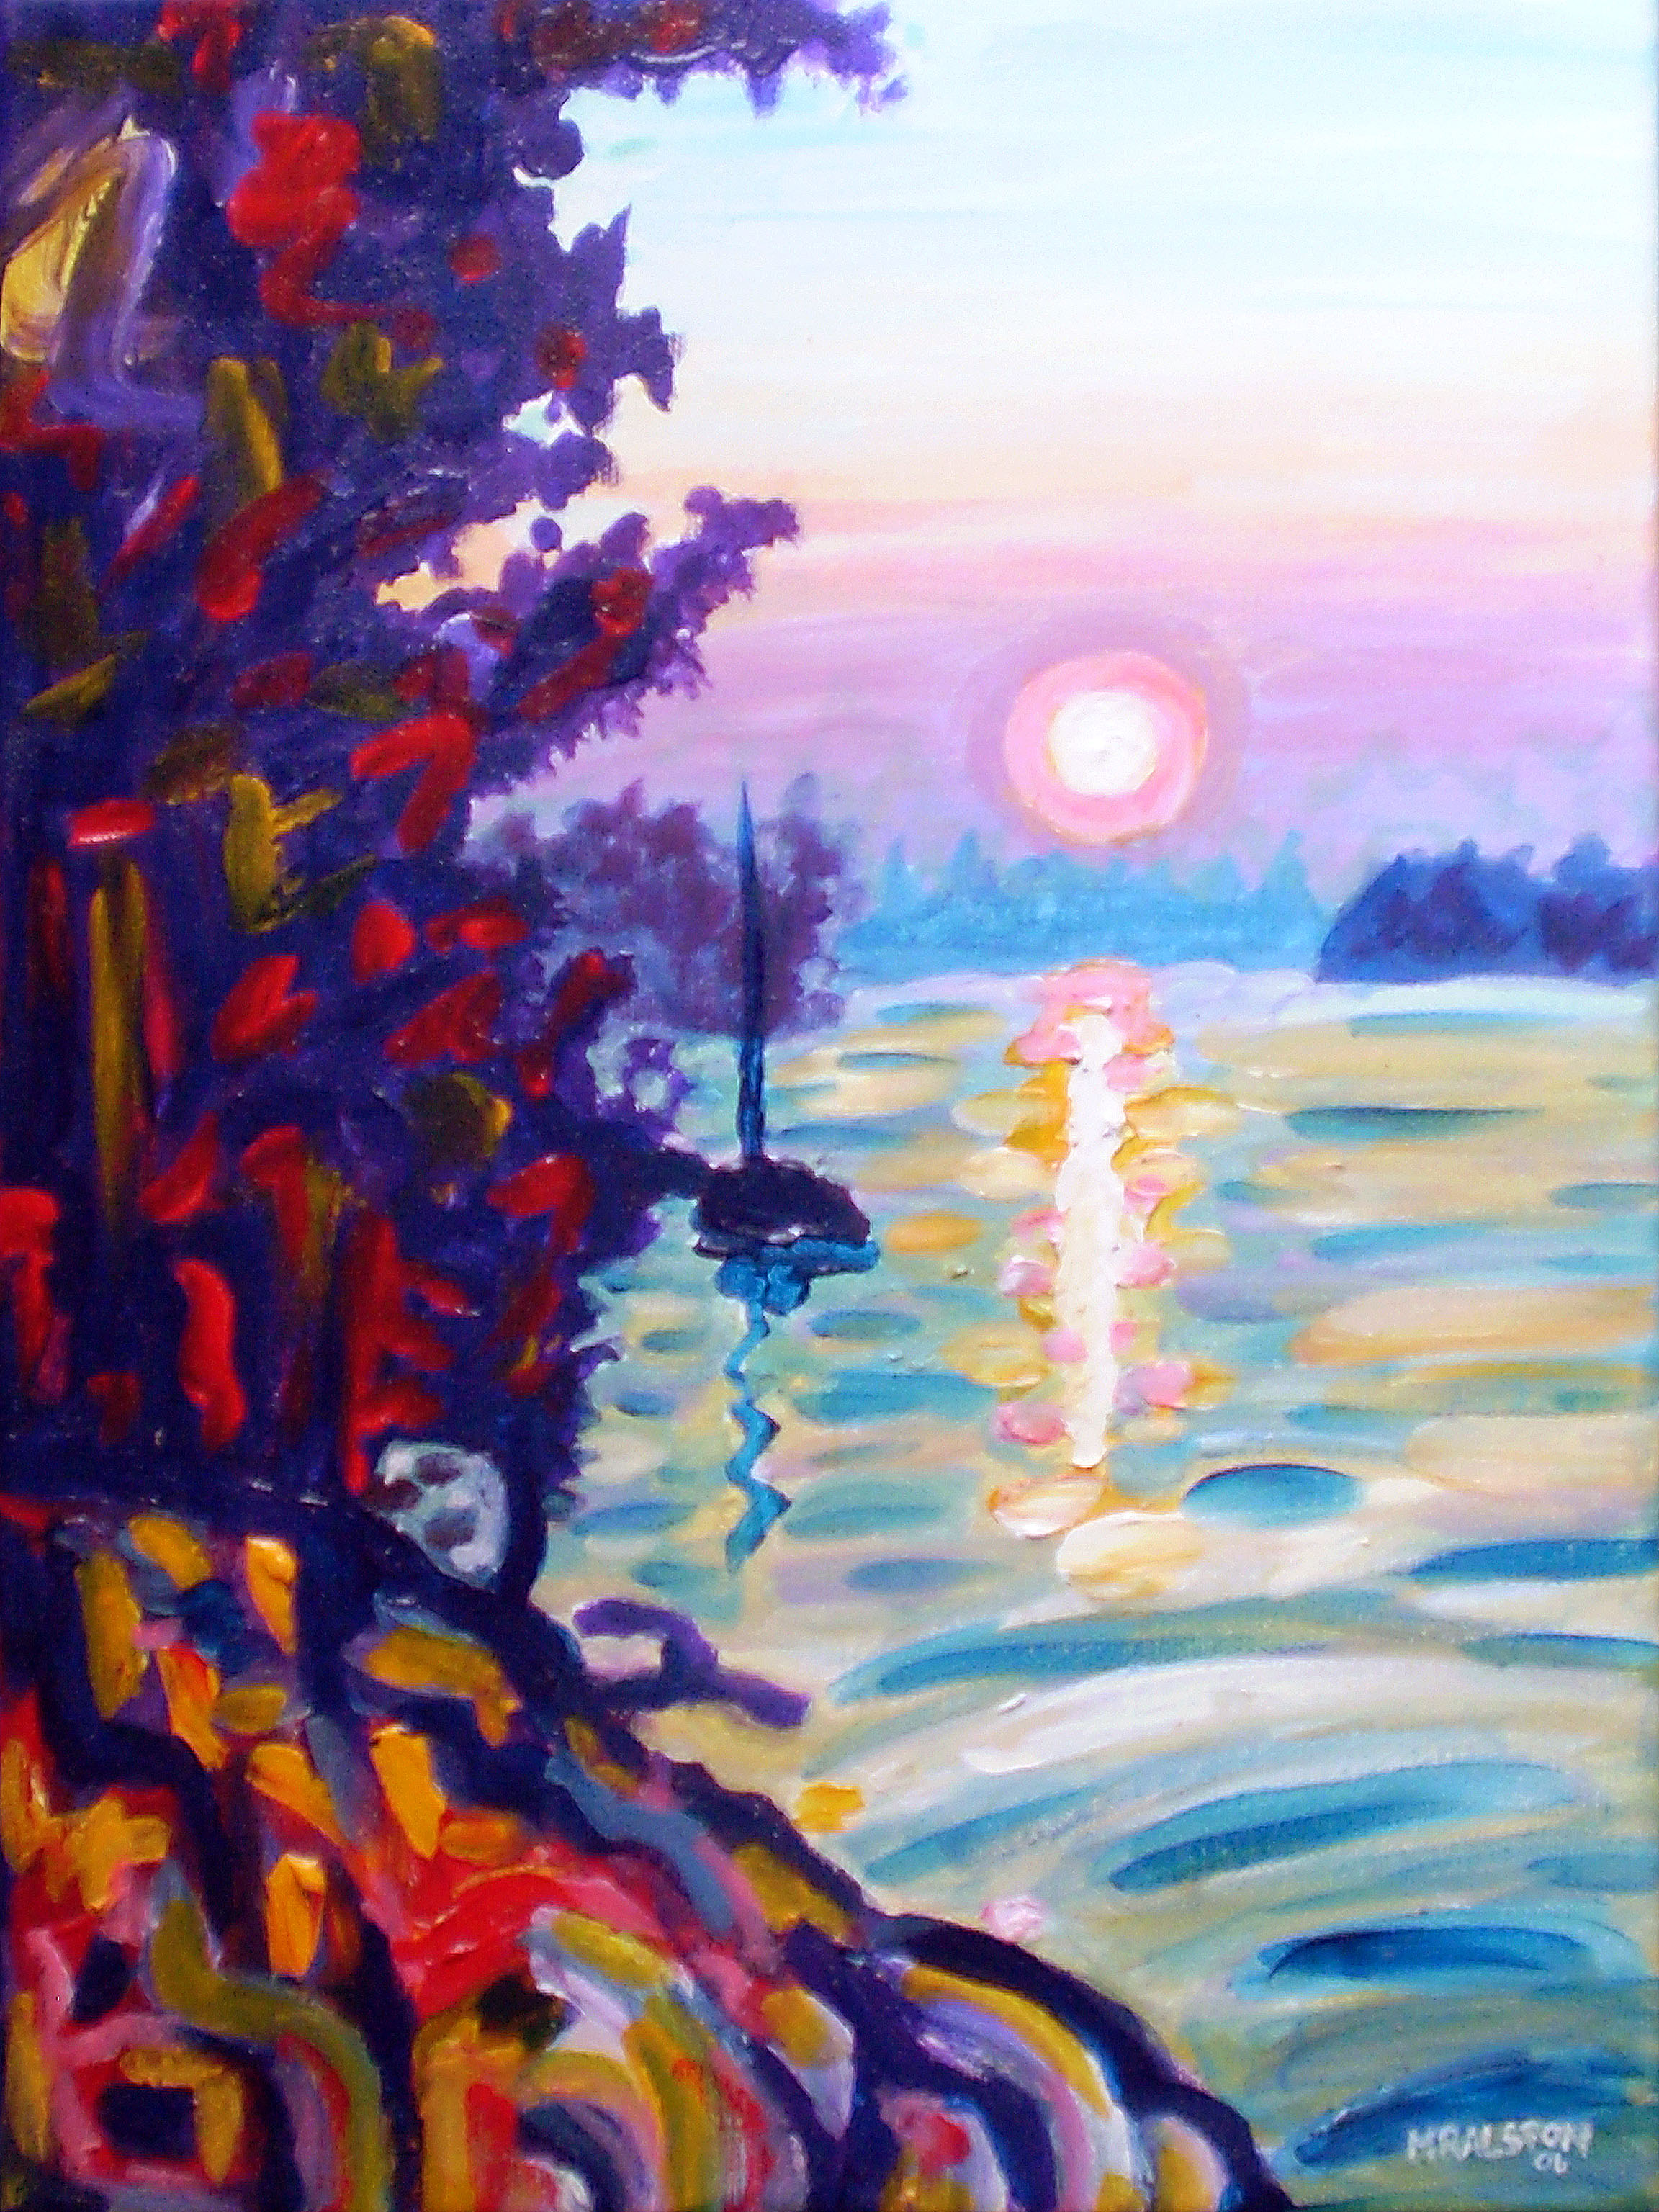 Acrylic painting of an Ontario lake sunrise scene by Morgan Ralston